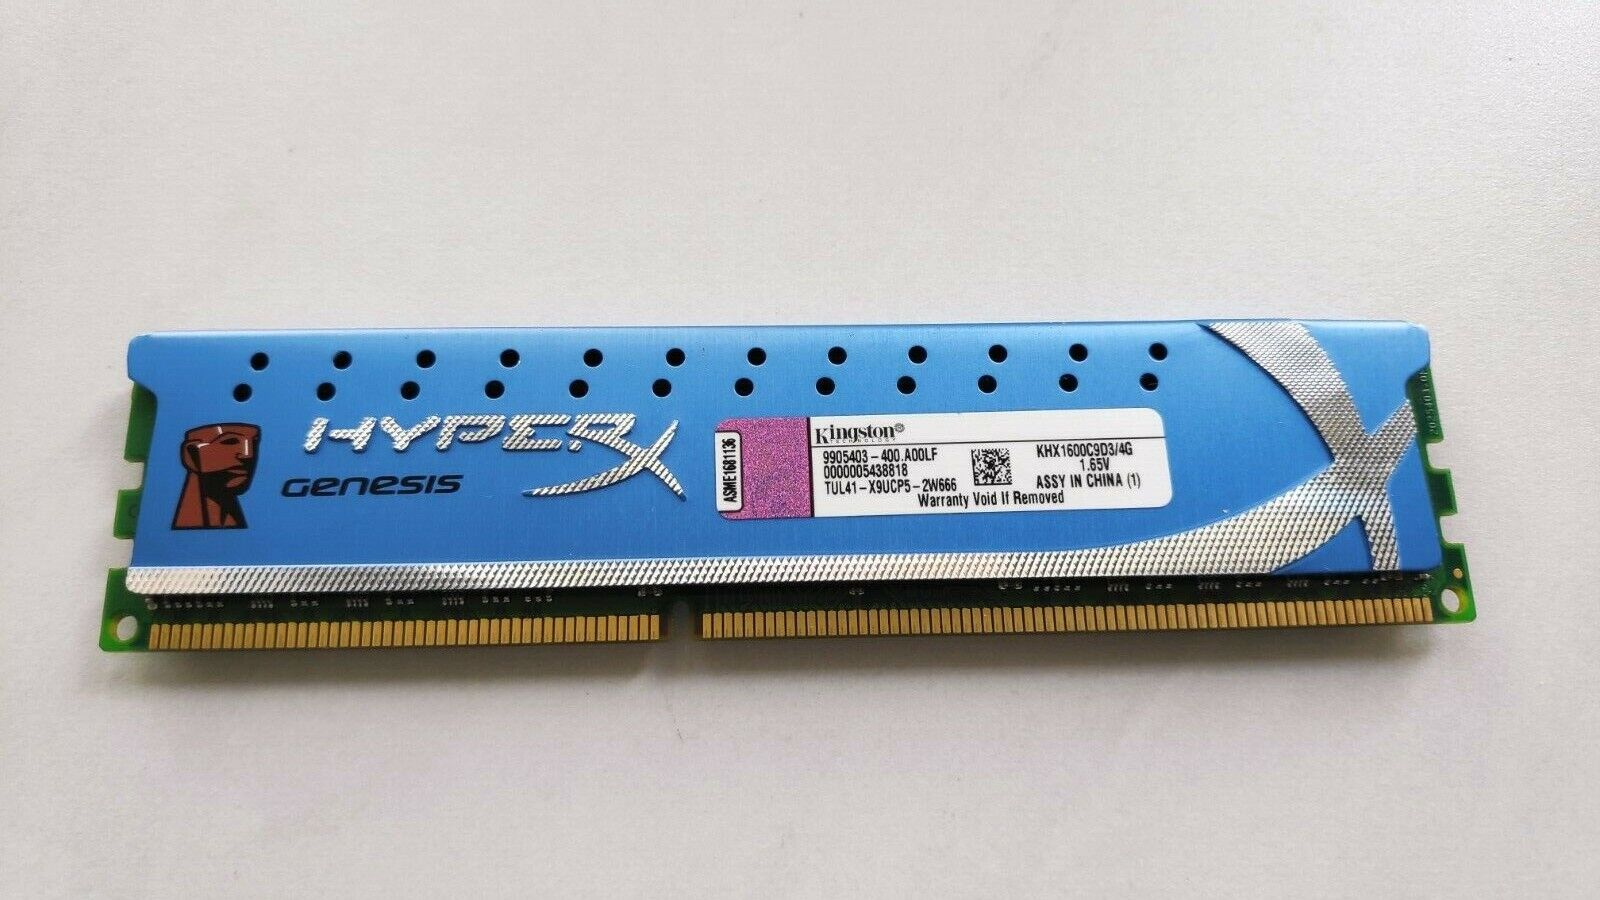 Kingston HYPERX Genesis KHX1600C9D3/4G 4GB PC3-12800 DDR3-1600MHz Memory RAM